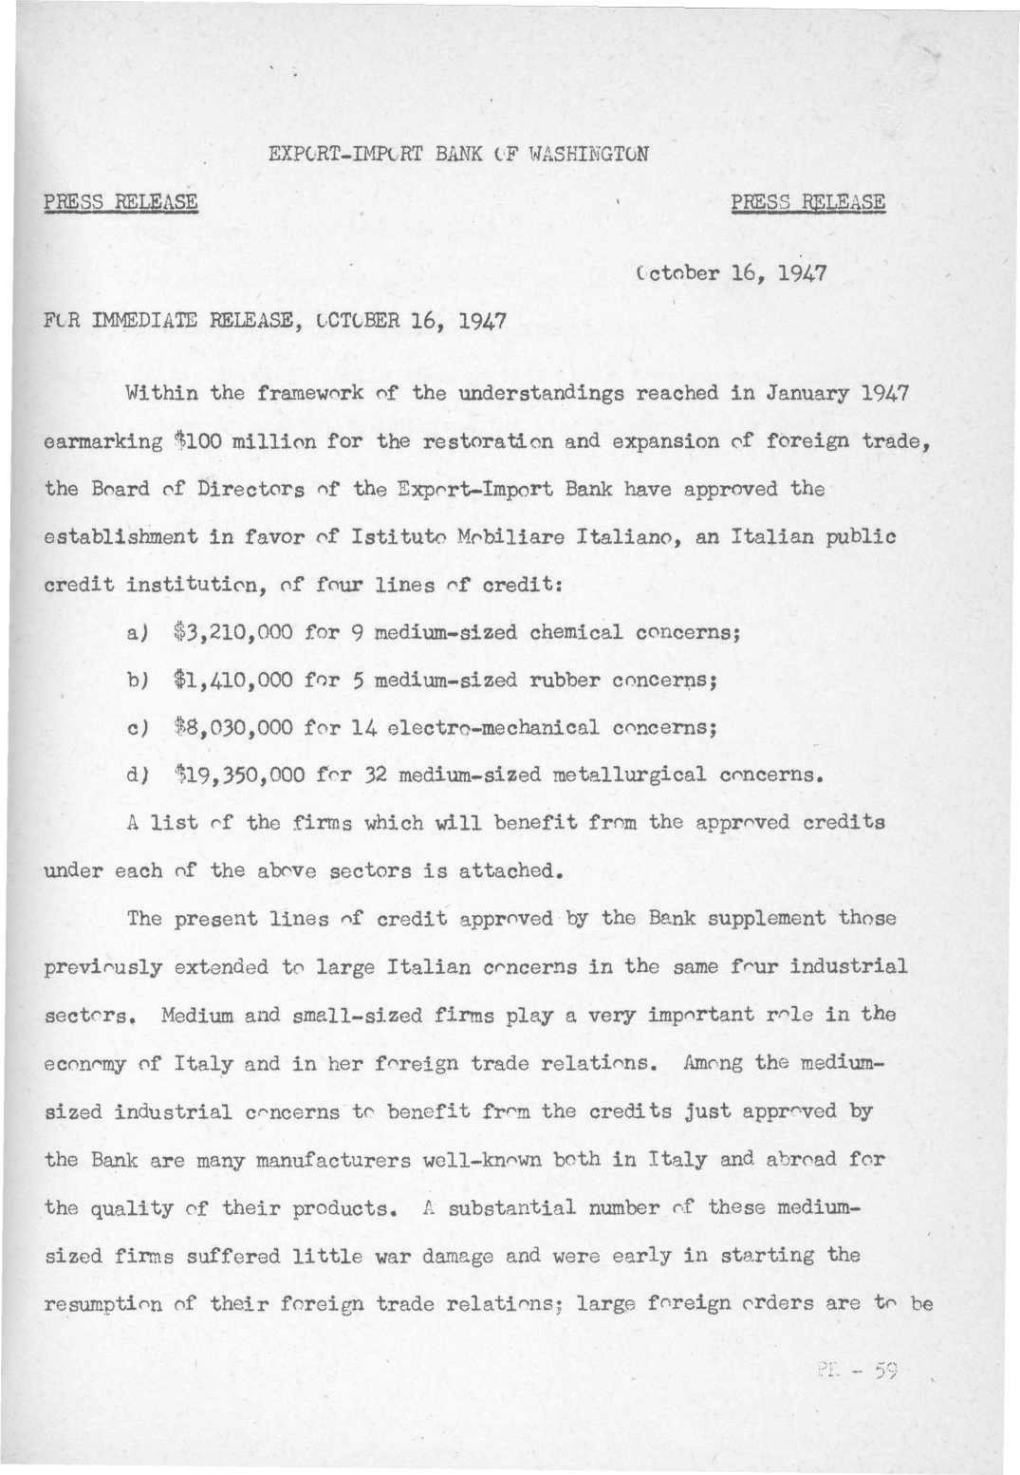 October 16, 1947 JPLR IMMEDIATE RELEASE, CCTCBER 16, 1947